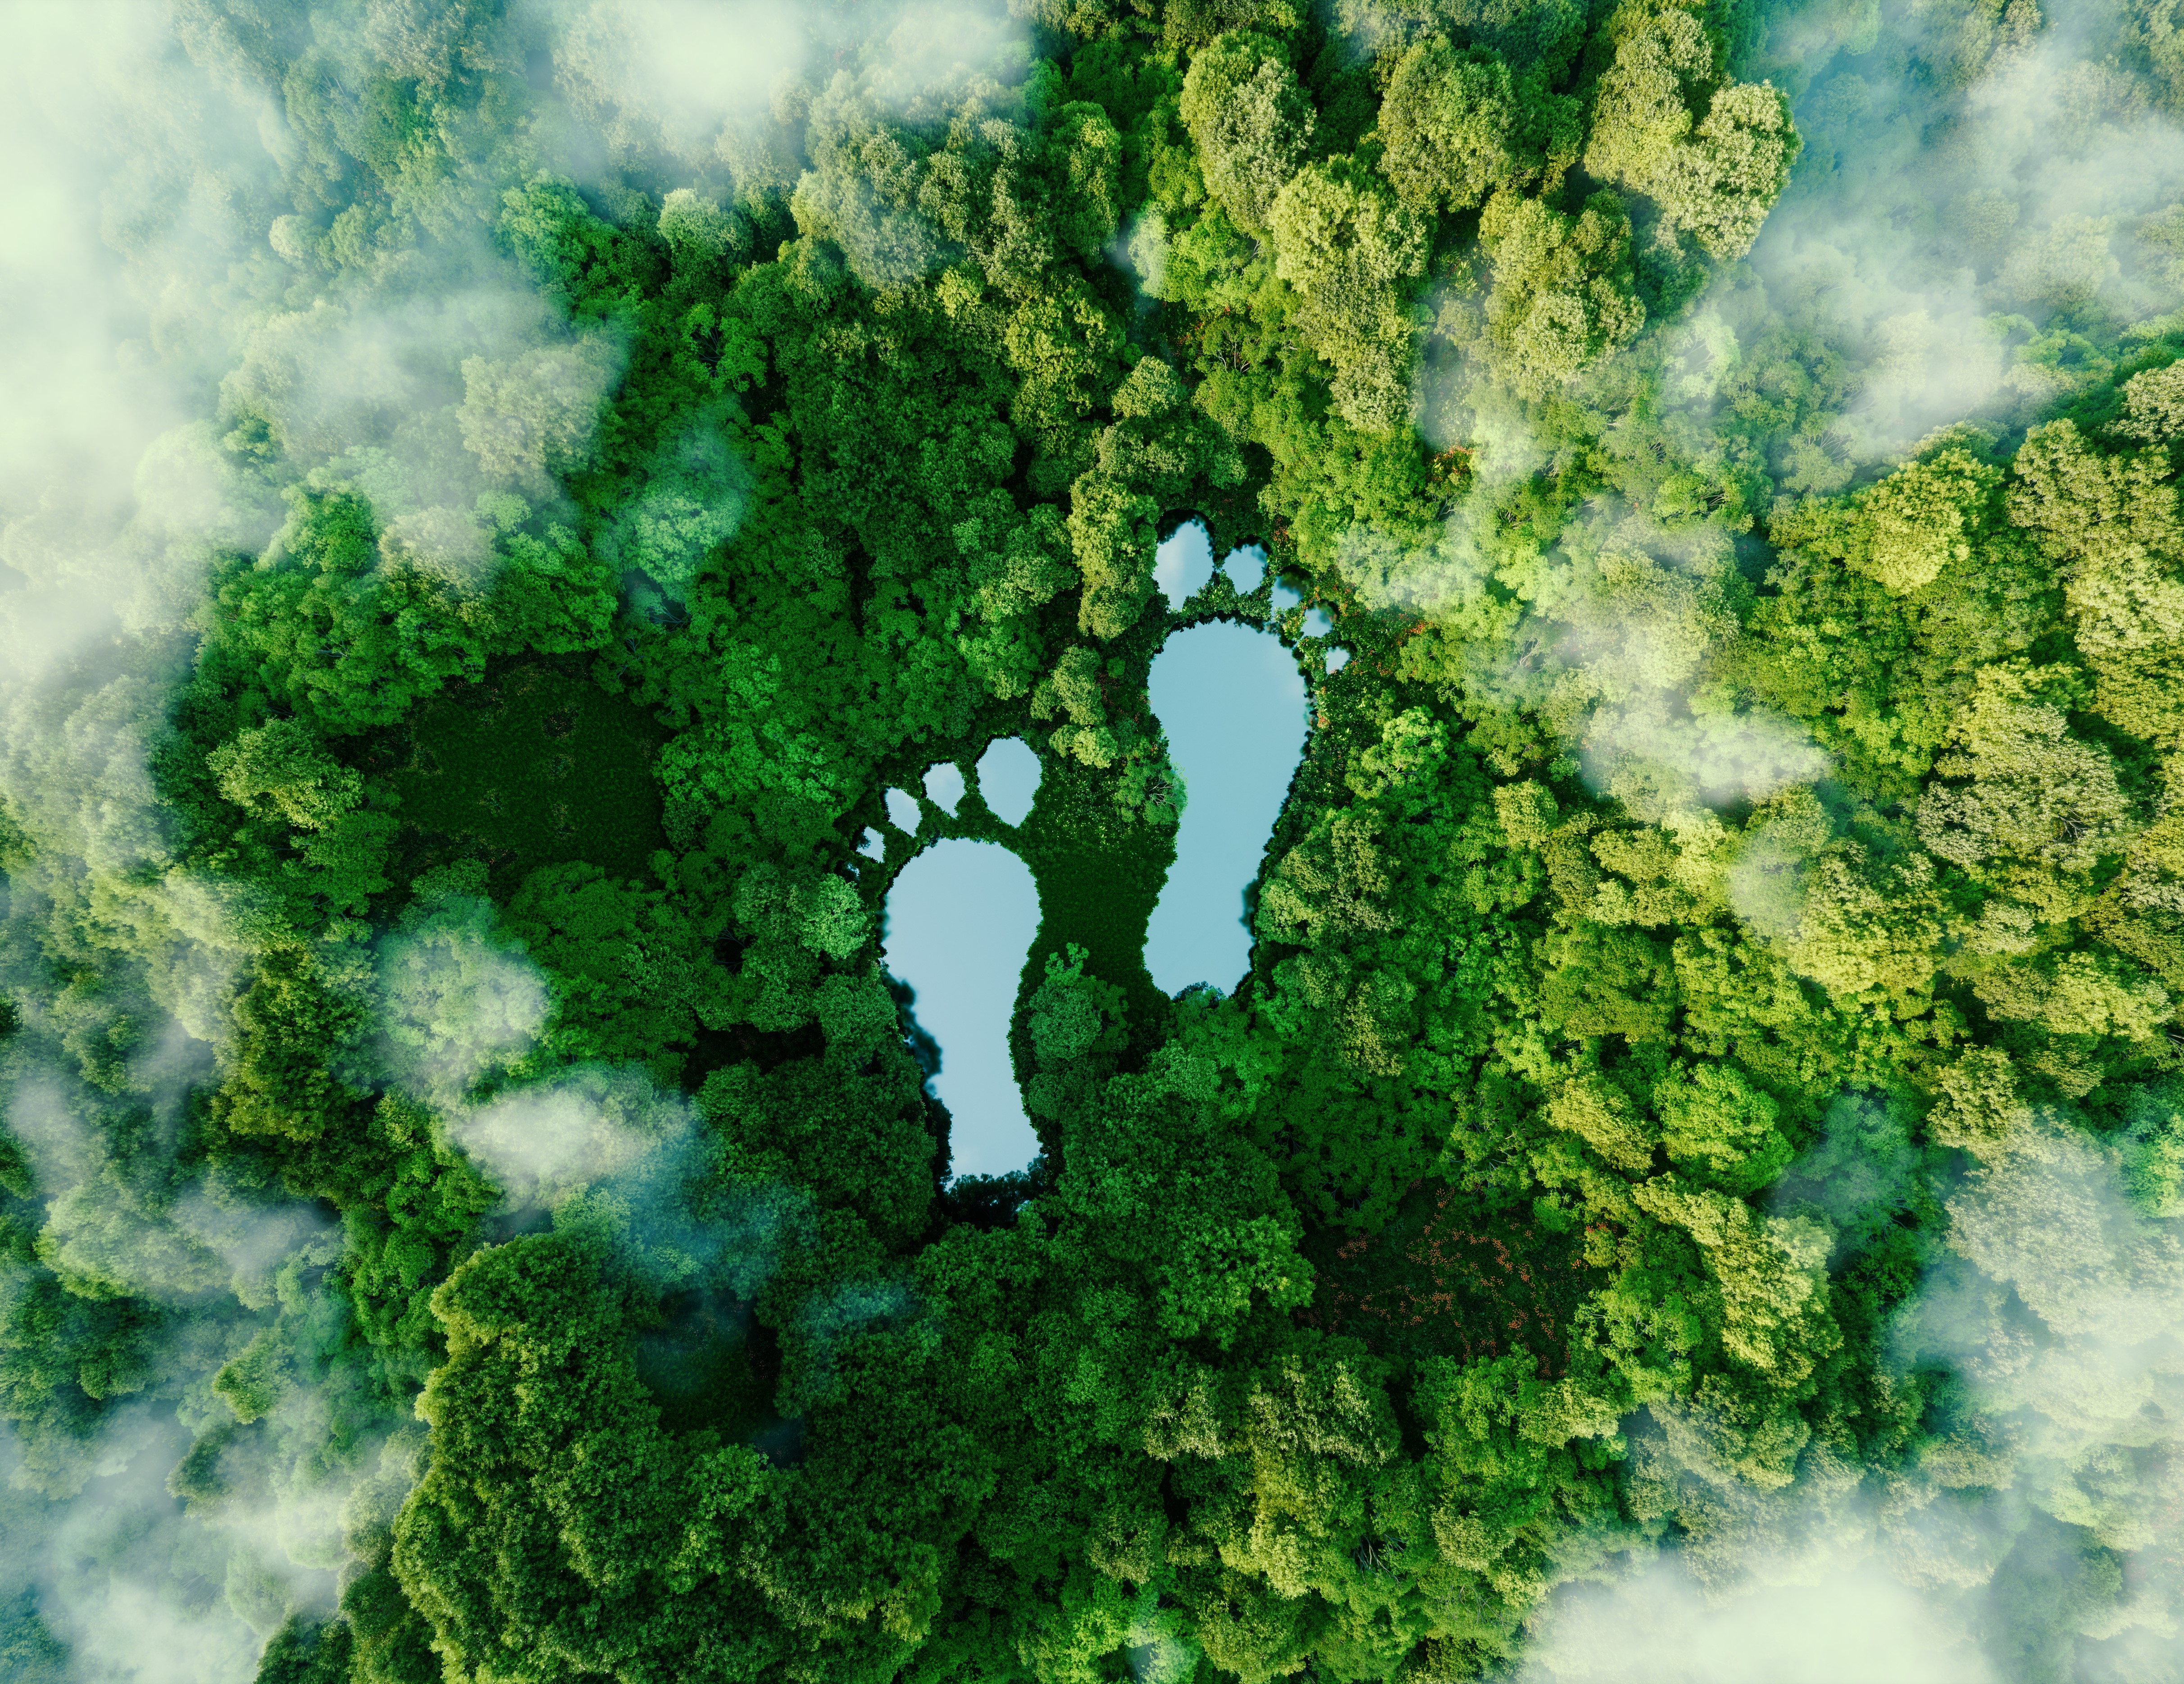 Carbon Footprint.